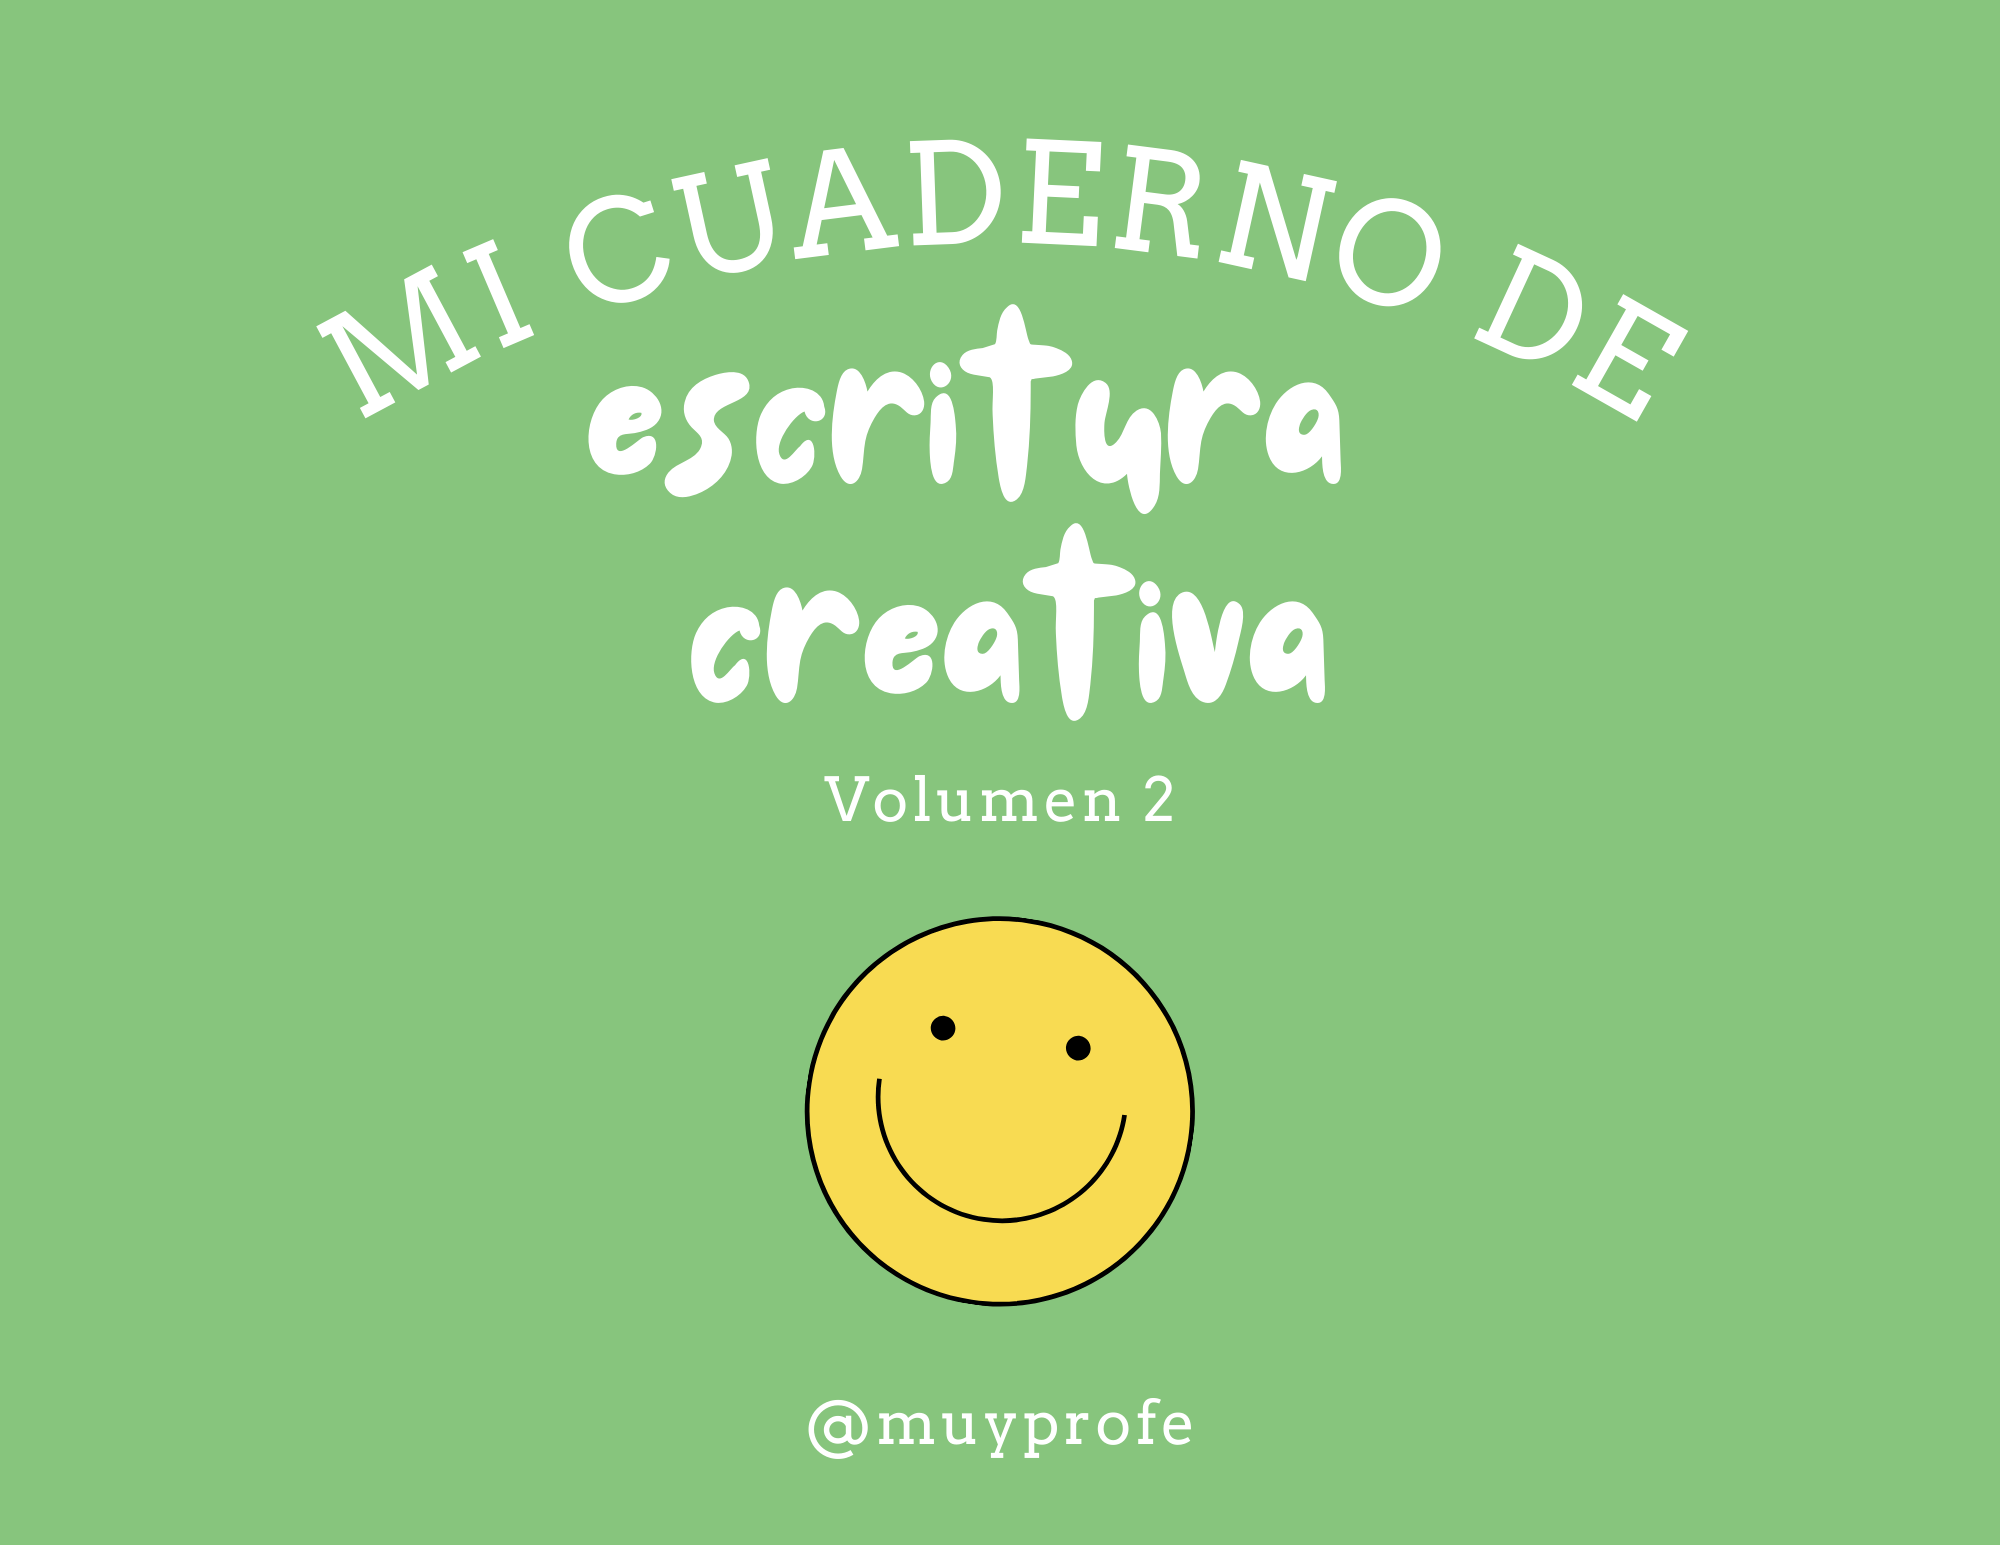 CUADERNILLO DE ESCRITURA CREATIVA VOLUMEN 2